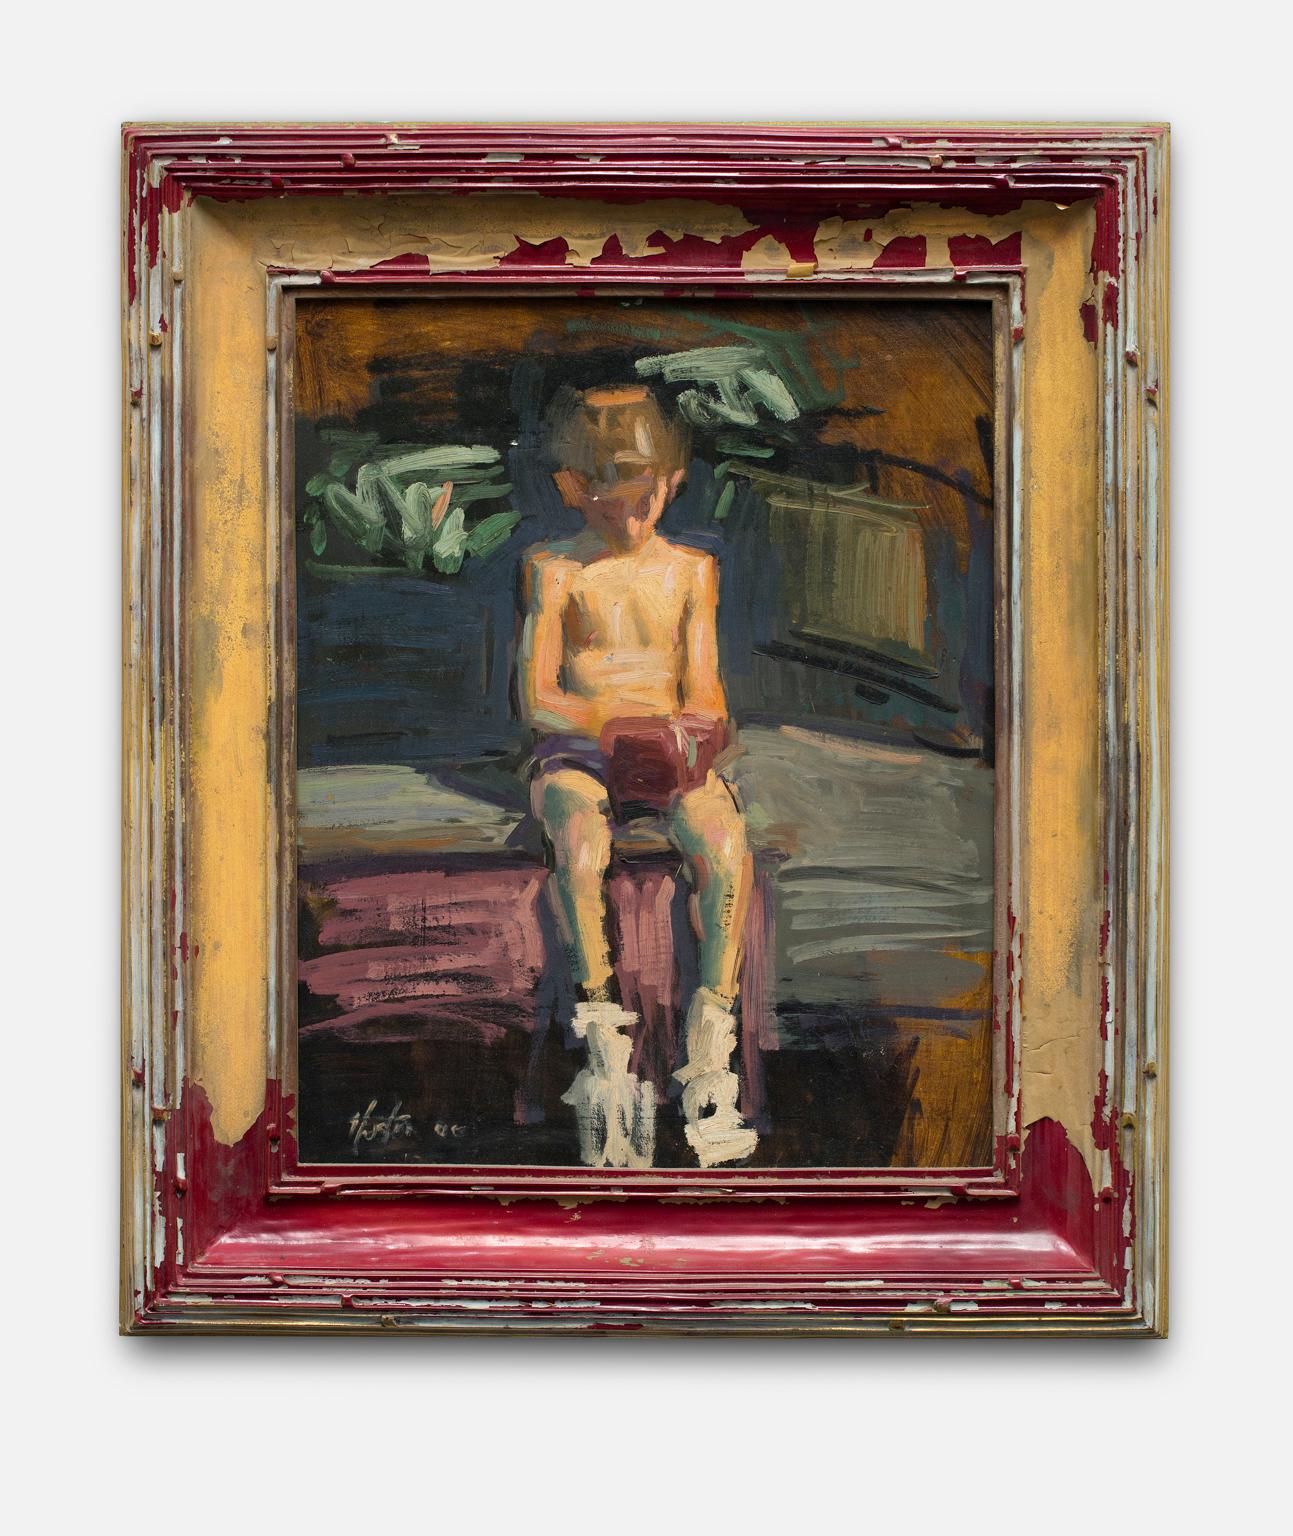 Steve Huston Figurative Painting - "Untitled" Small Male Child, Dressed for Boxing, Nostalgic, Antiqued Frame